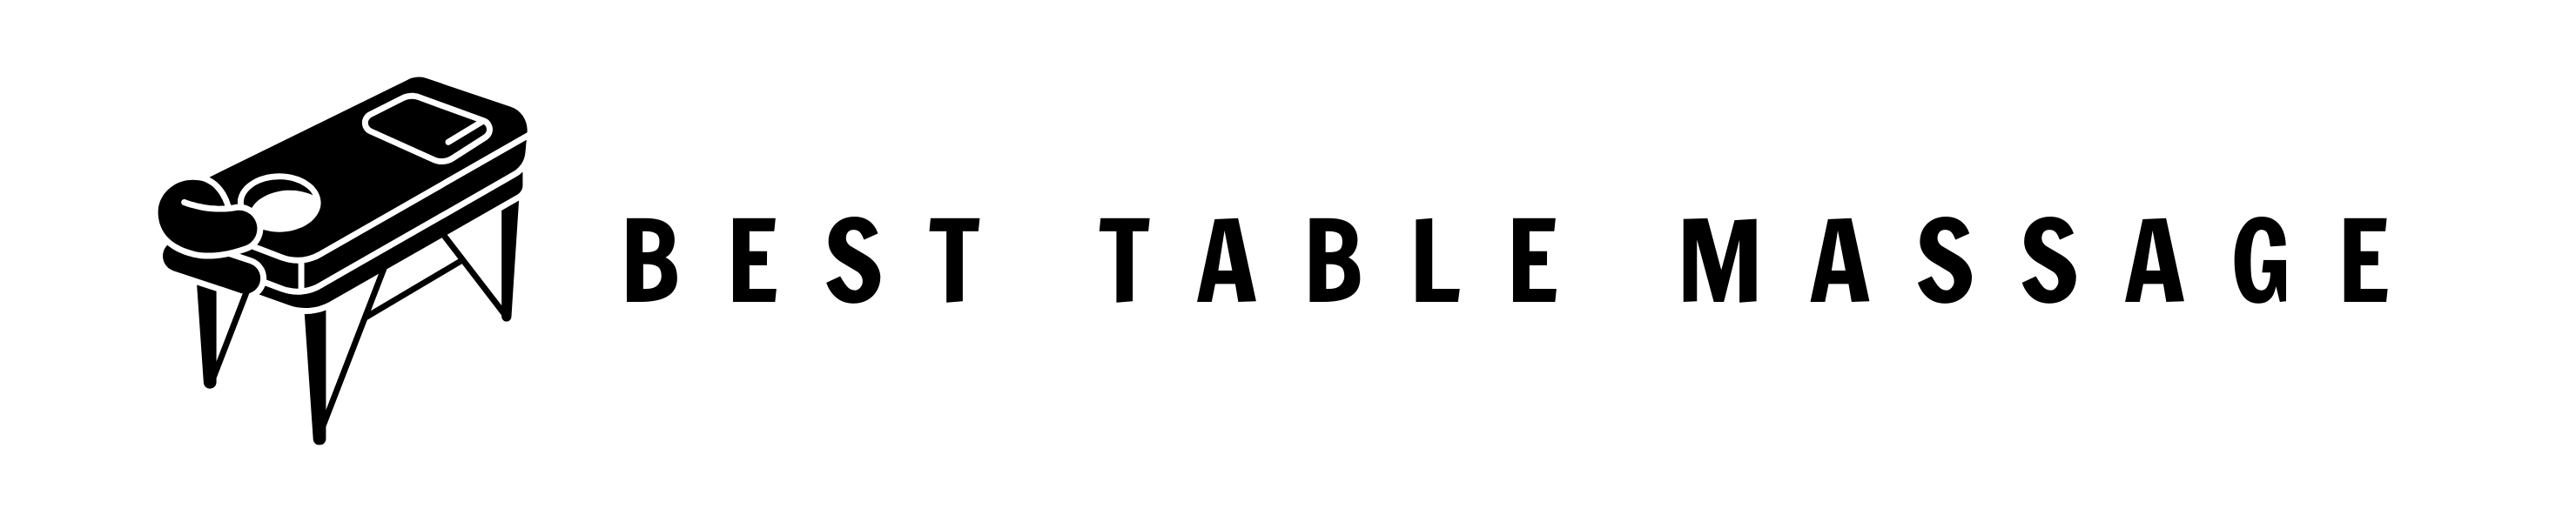 Best table Massage logo